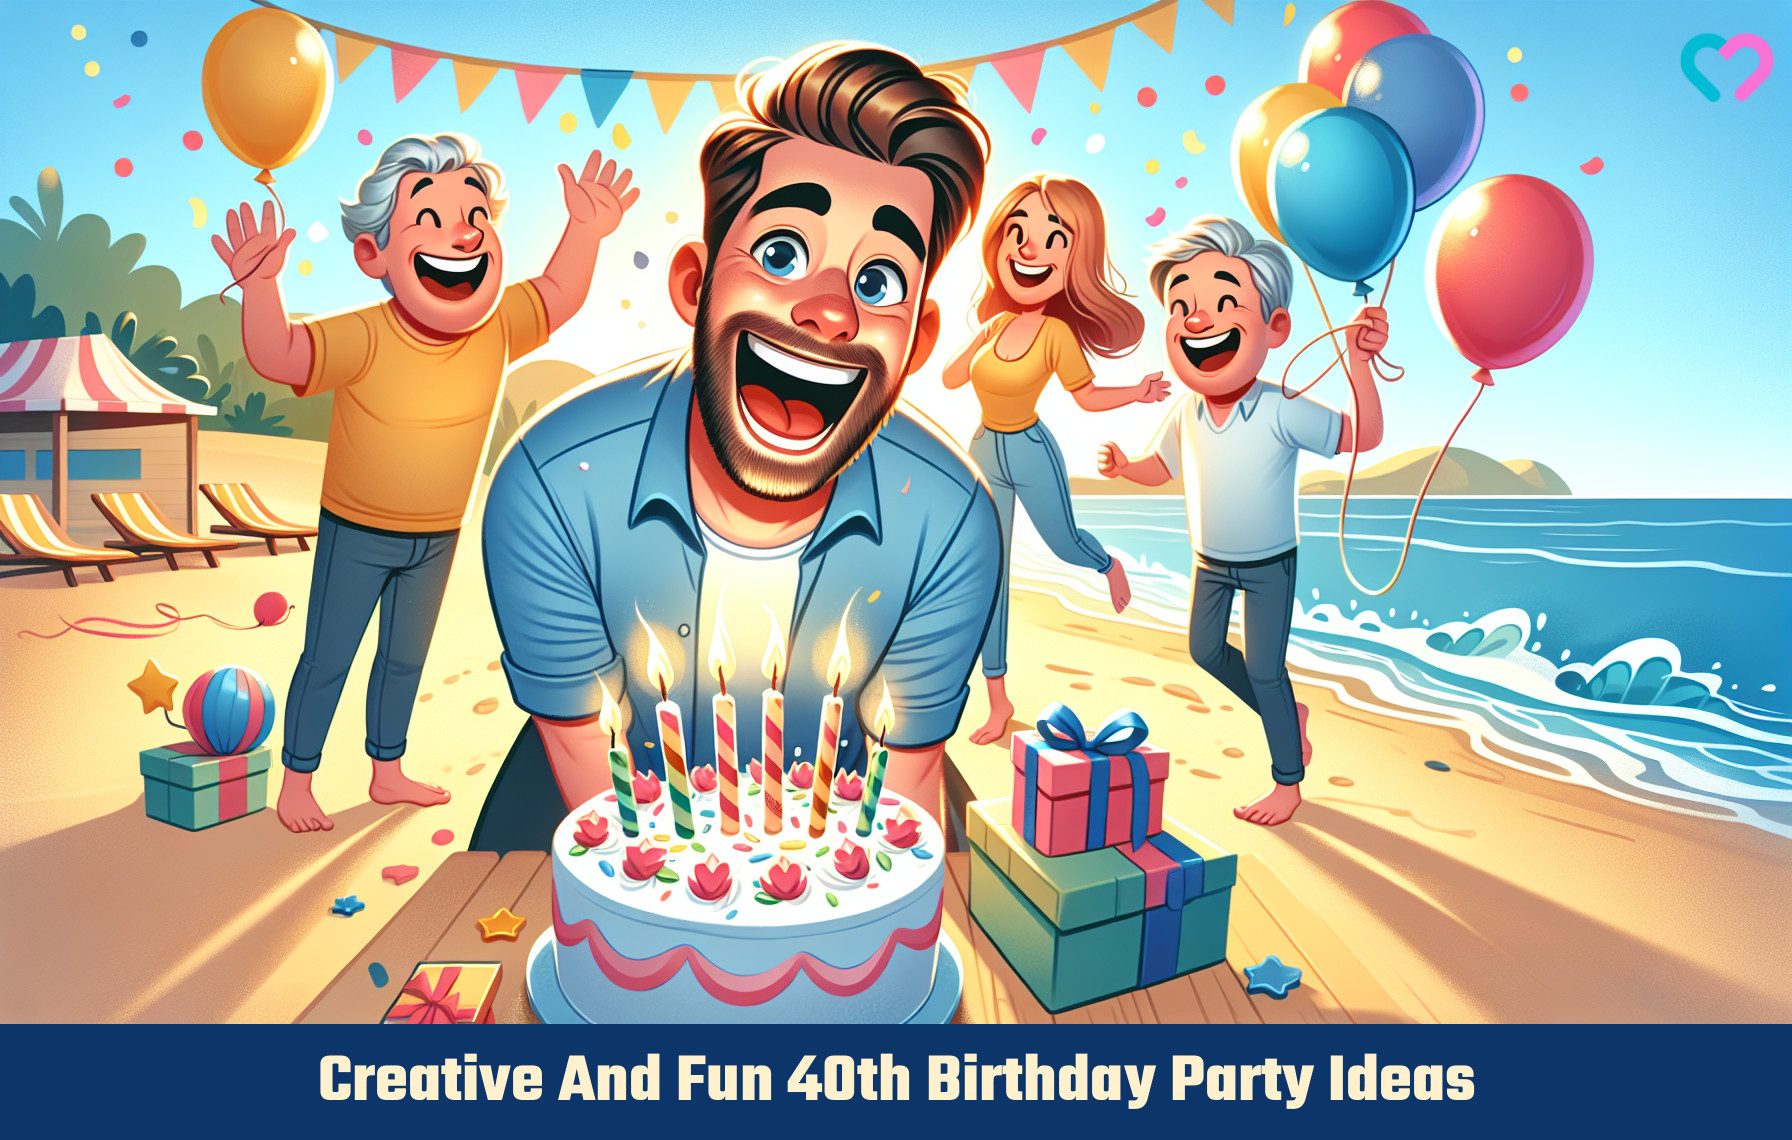 40th birthday party ideas_illustration